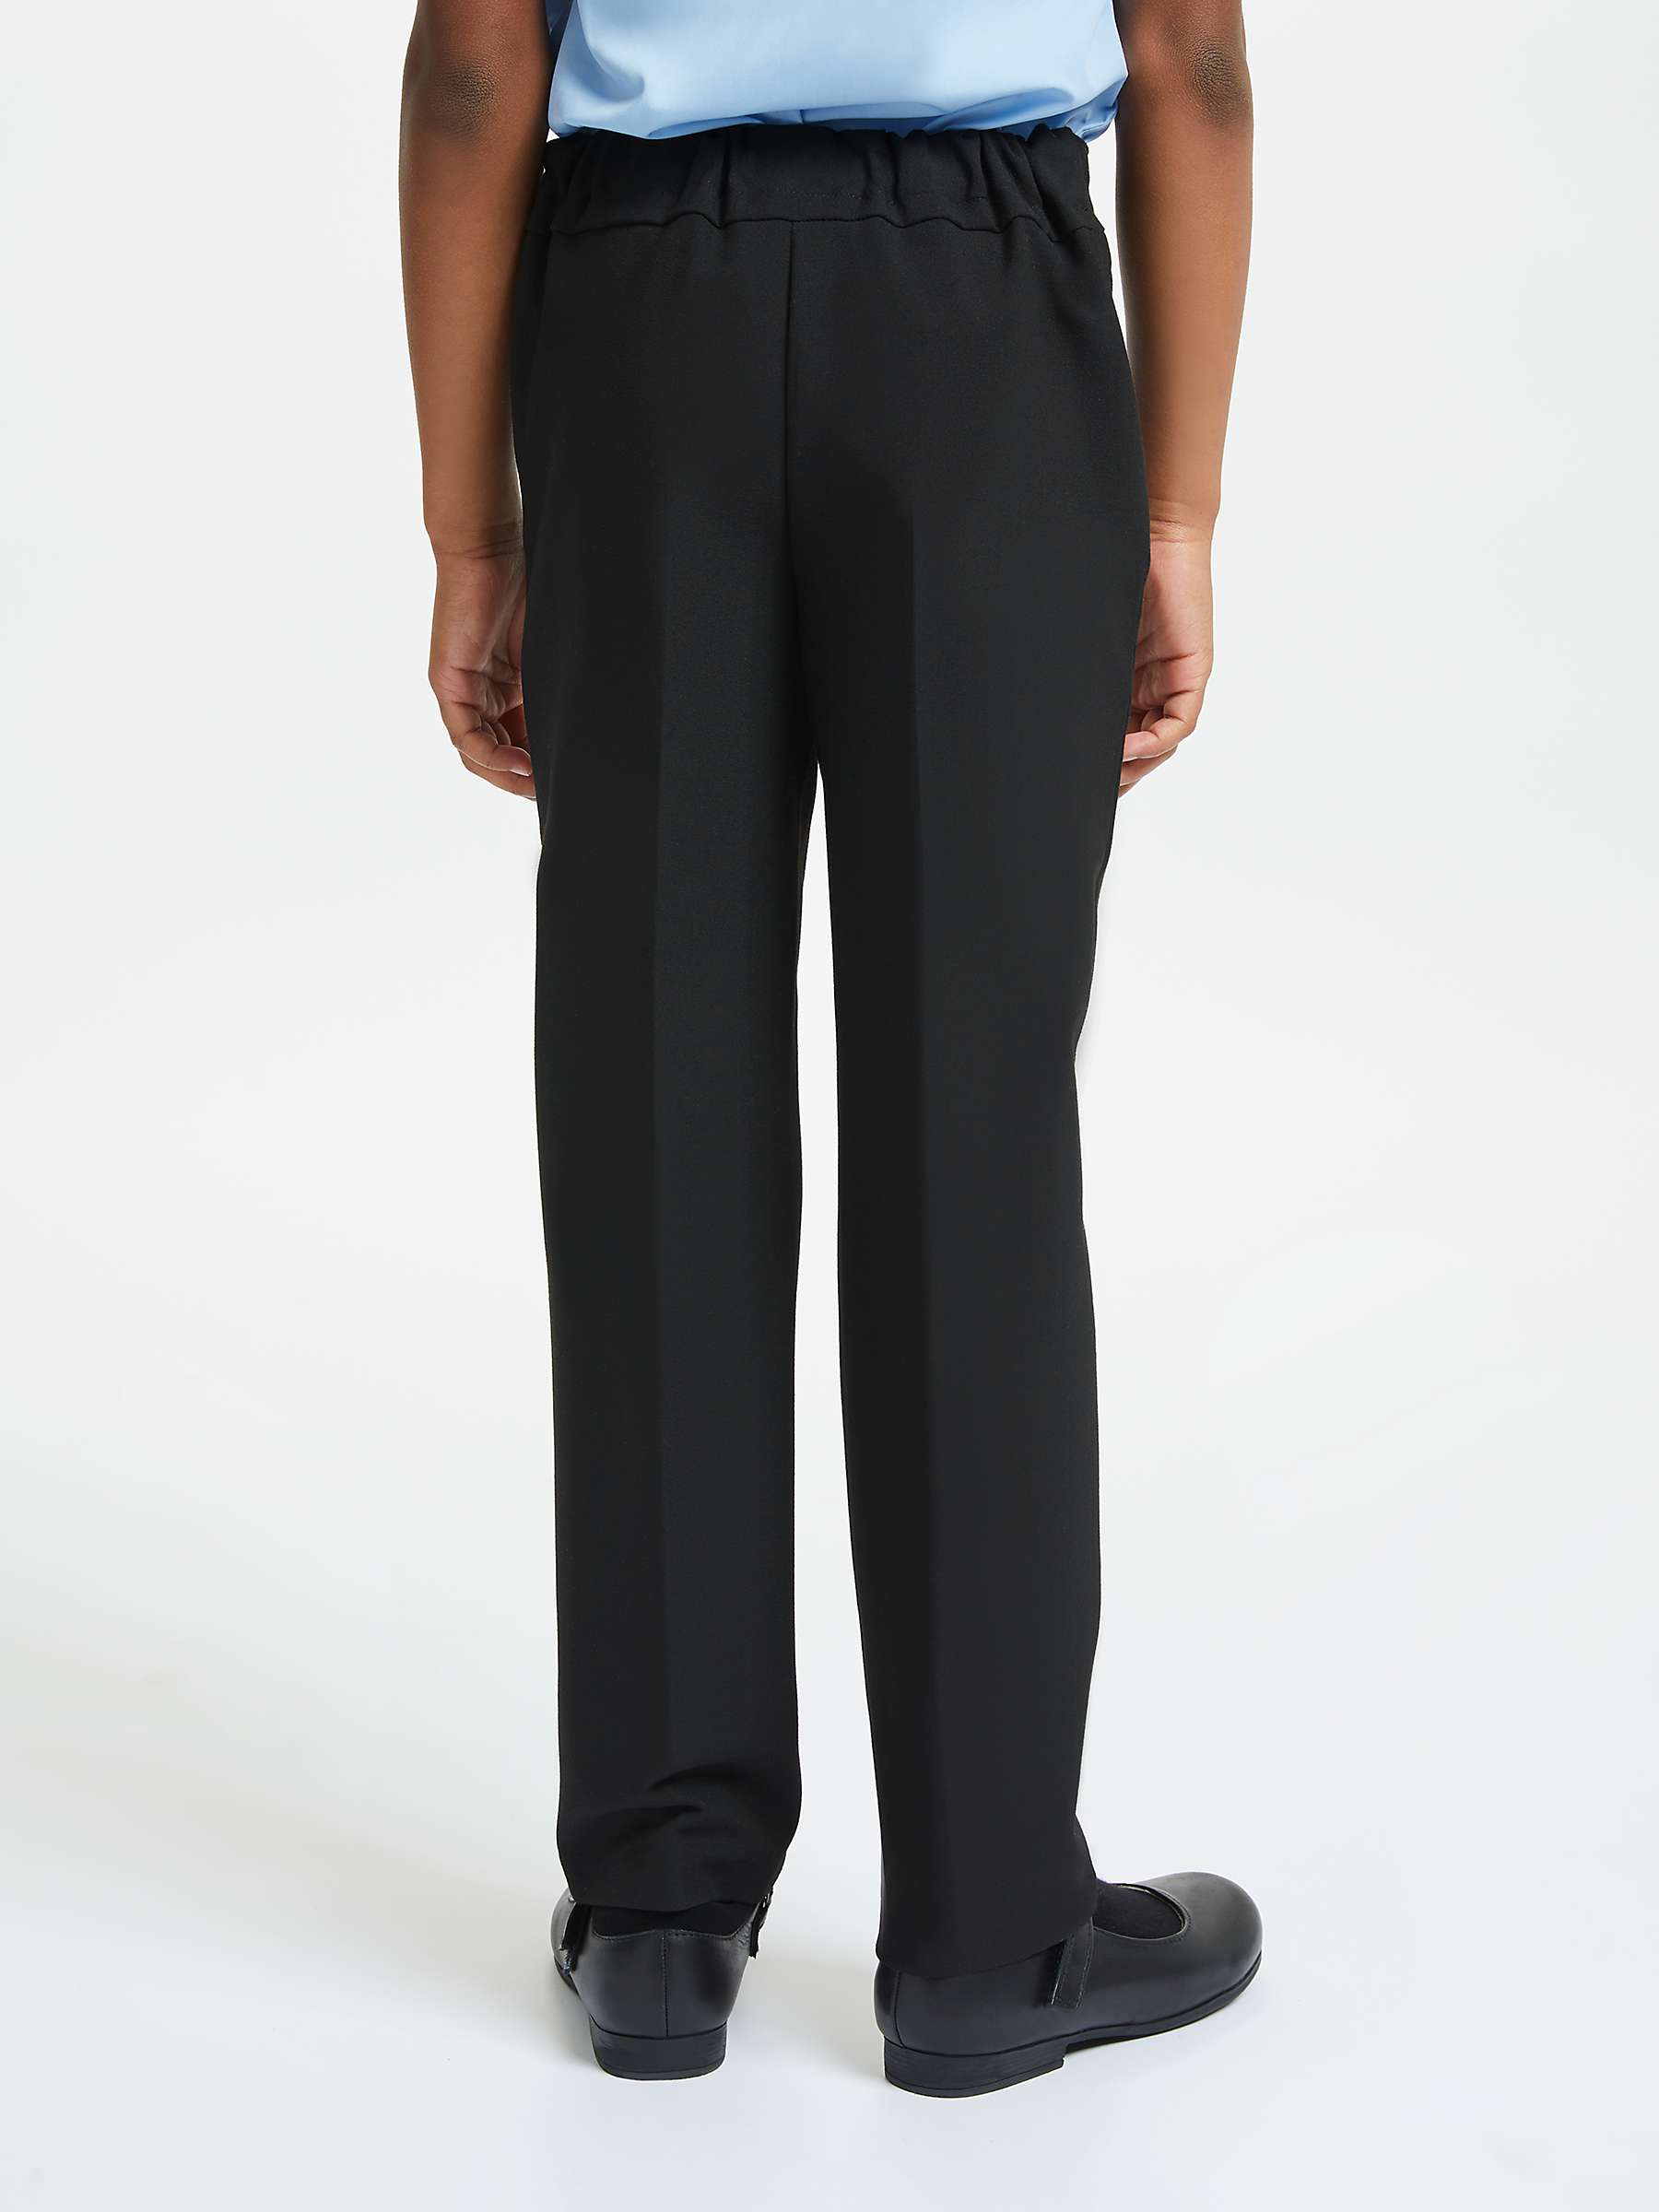 Buy John Lewis Girls' Regular Fit School Trousers, Black Online at johnlewis.com